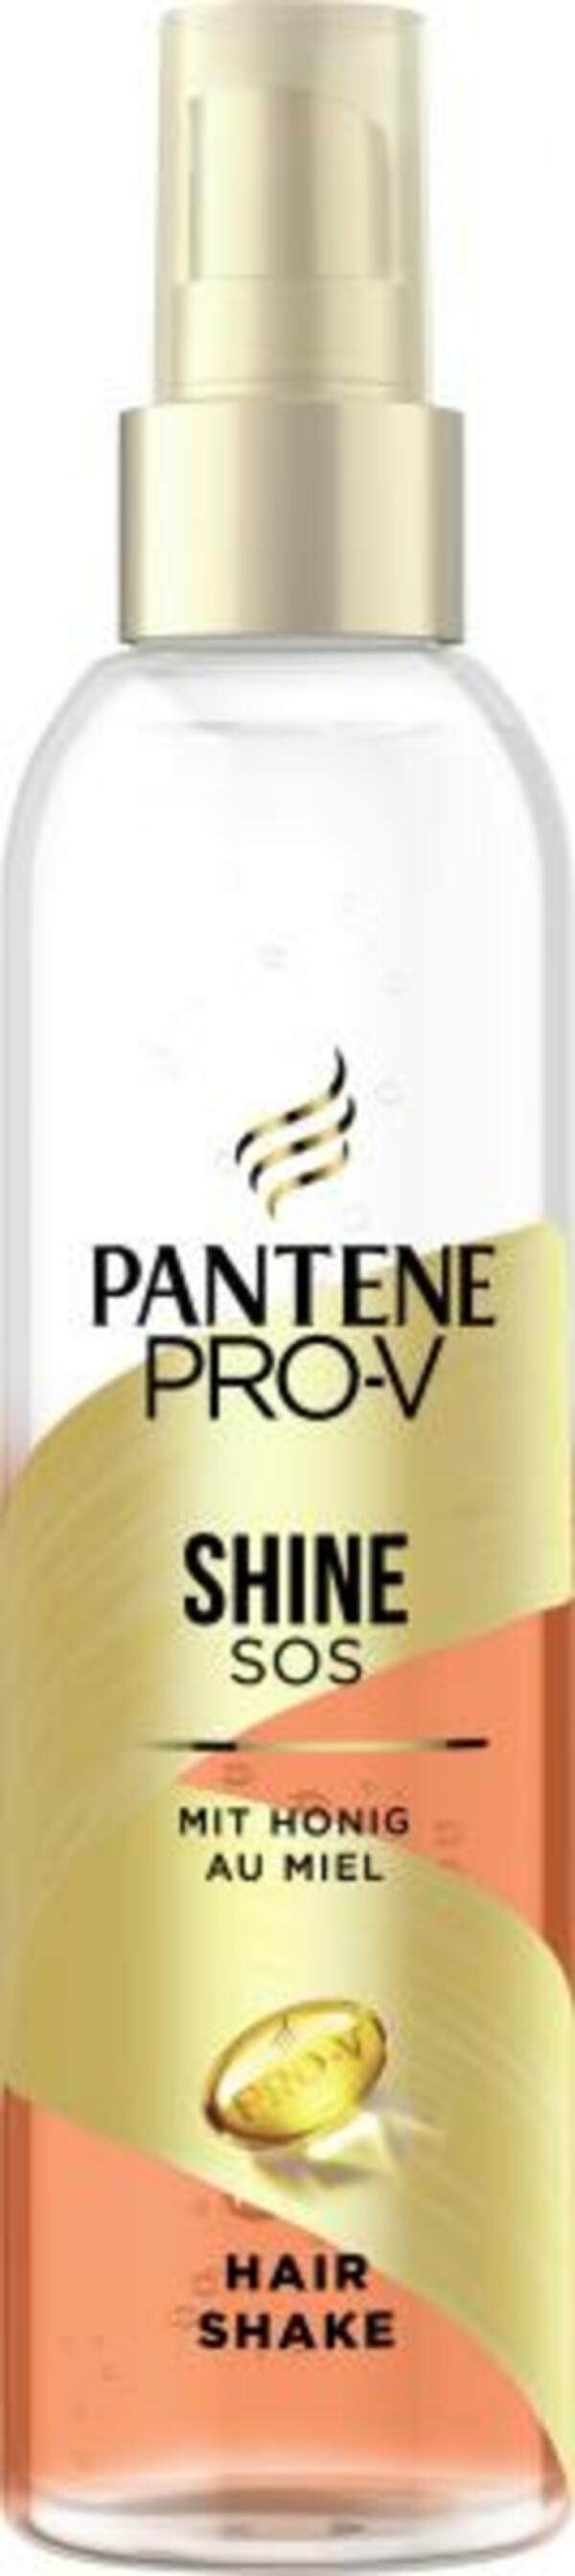 Bild 1 von Pantene Pro-V Shine SOS Hair Shake